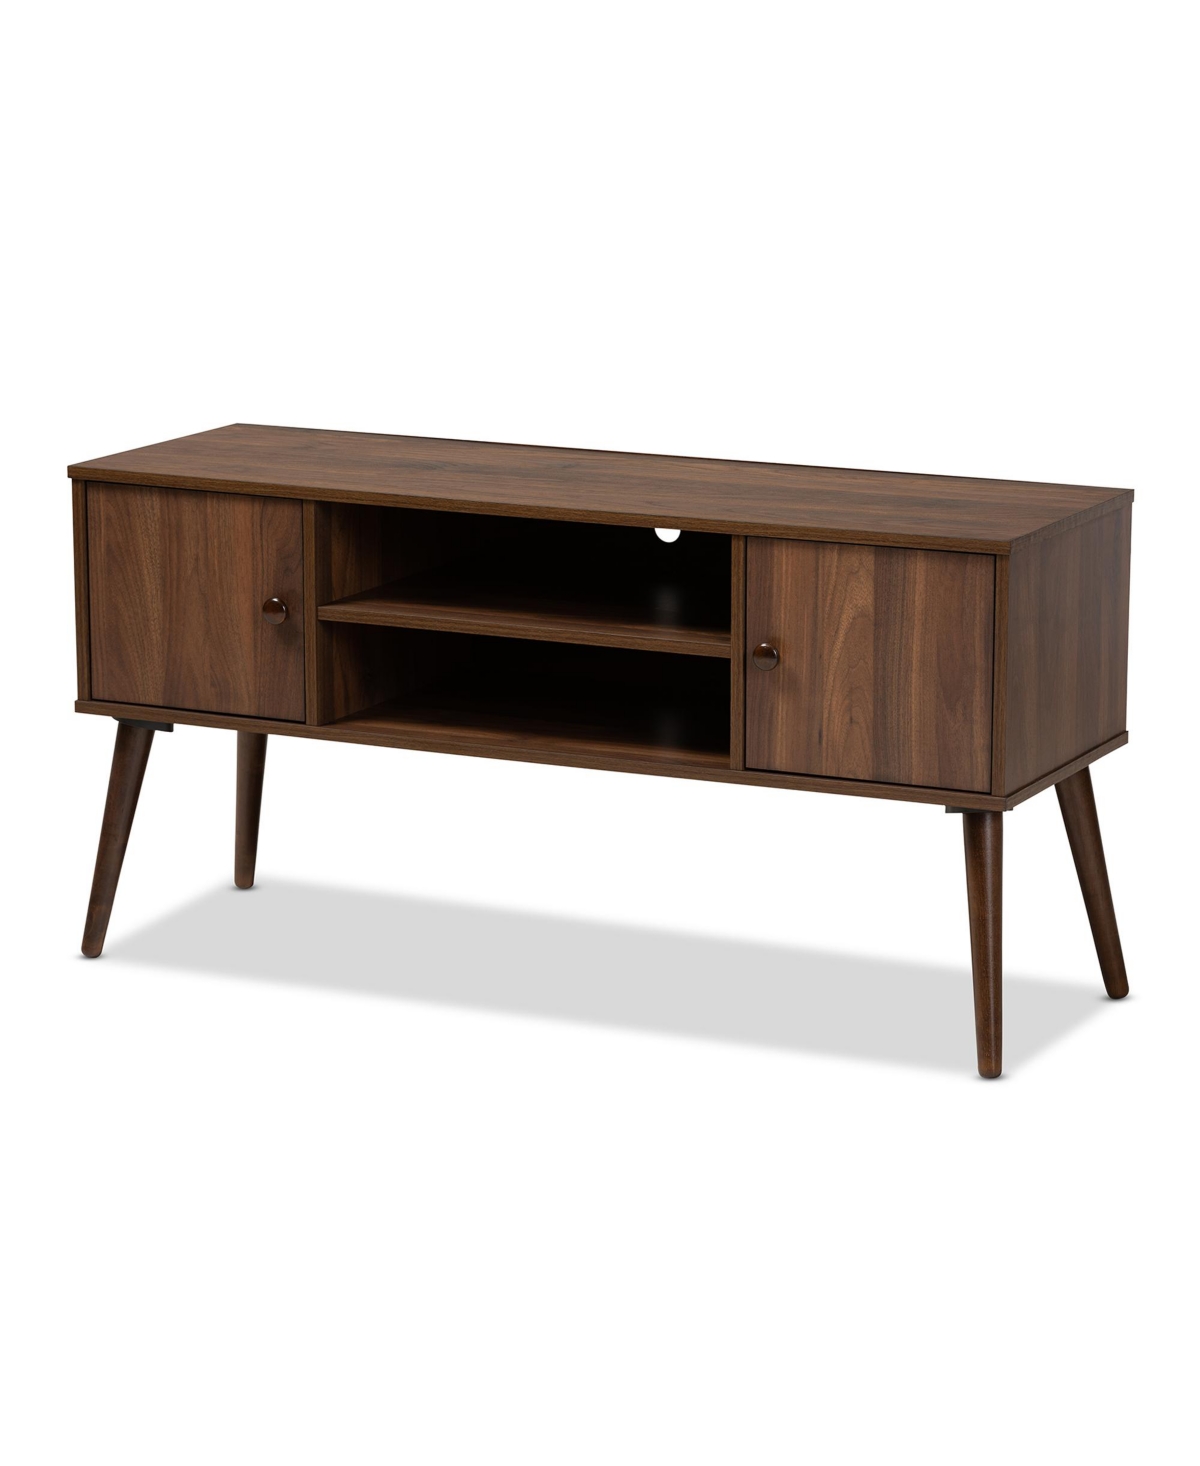 Furniture Alard Tv Stand In Brown